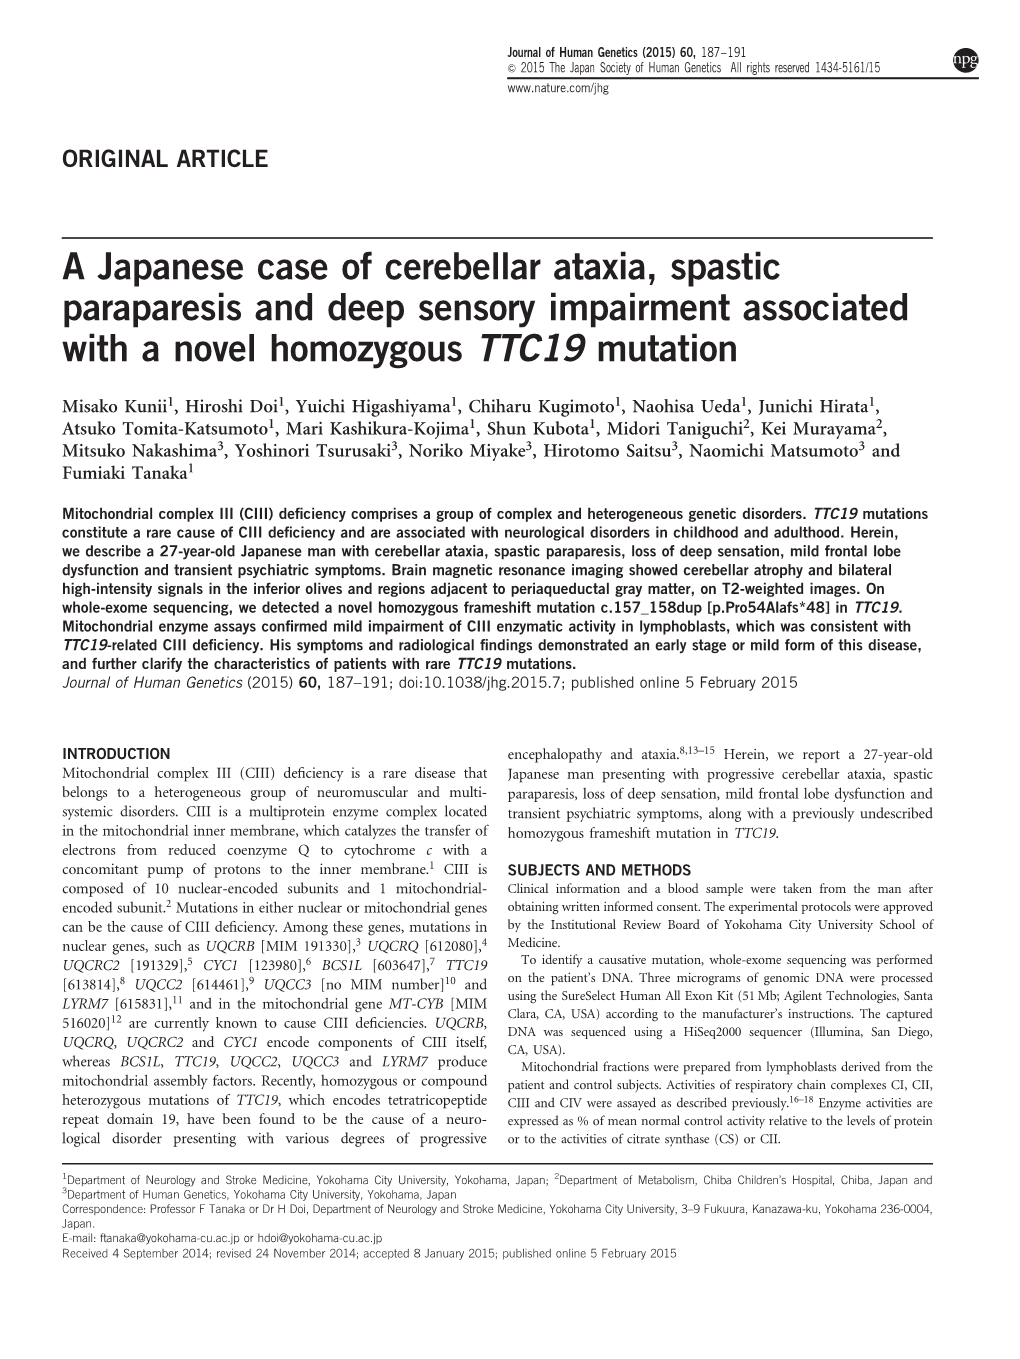 A Japanese Case of Cerebellar Ataxia, Spastic Paraparesis and Deep Sensory Impairment Associated with a Novel Homozygous TTC19 Mutation